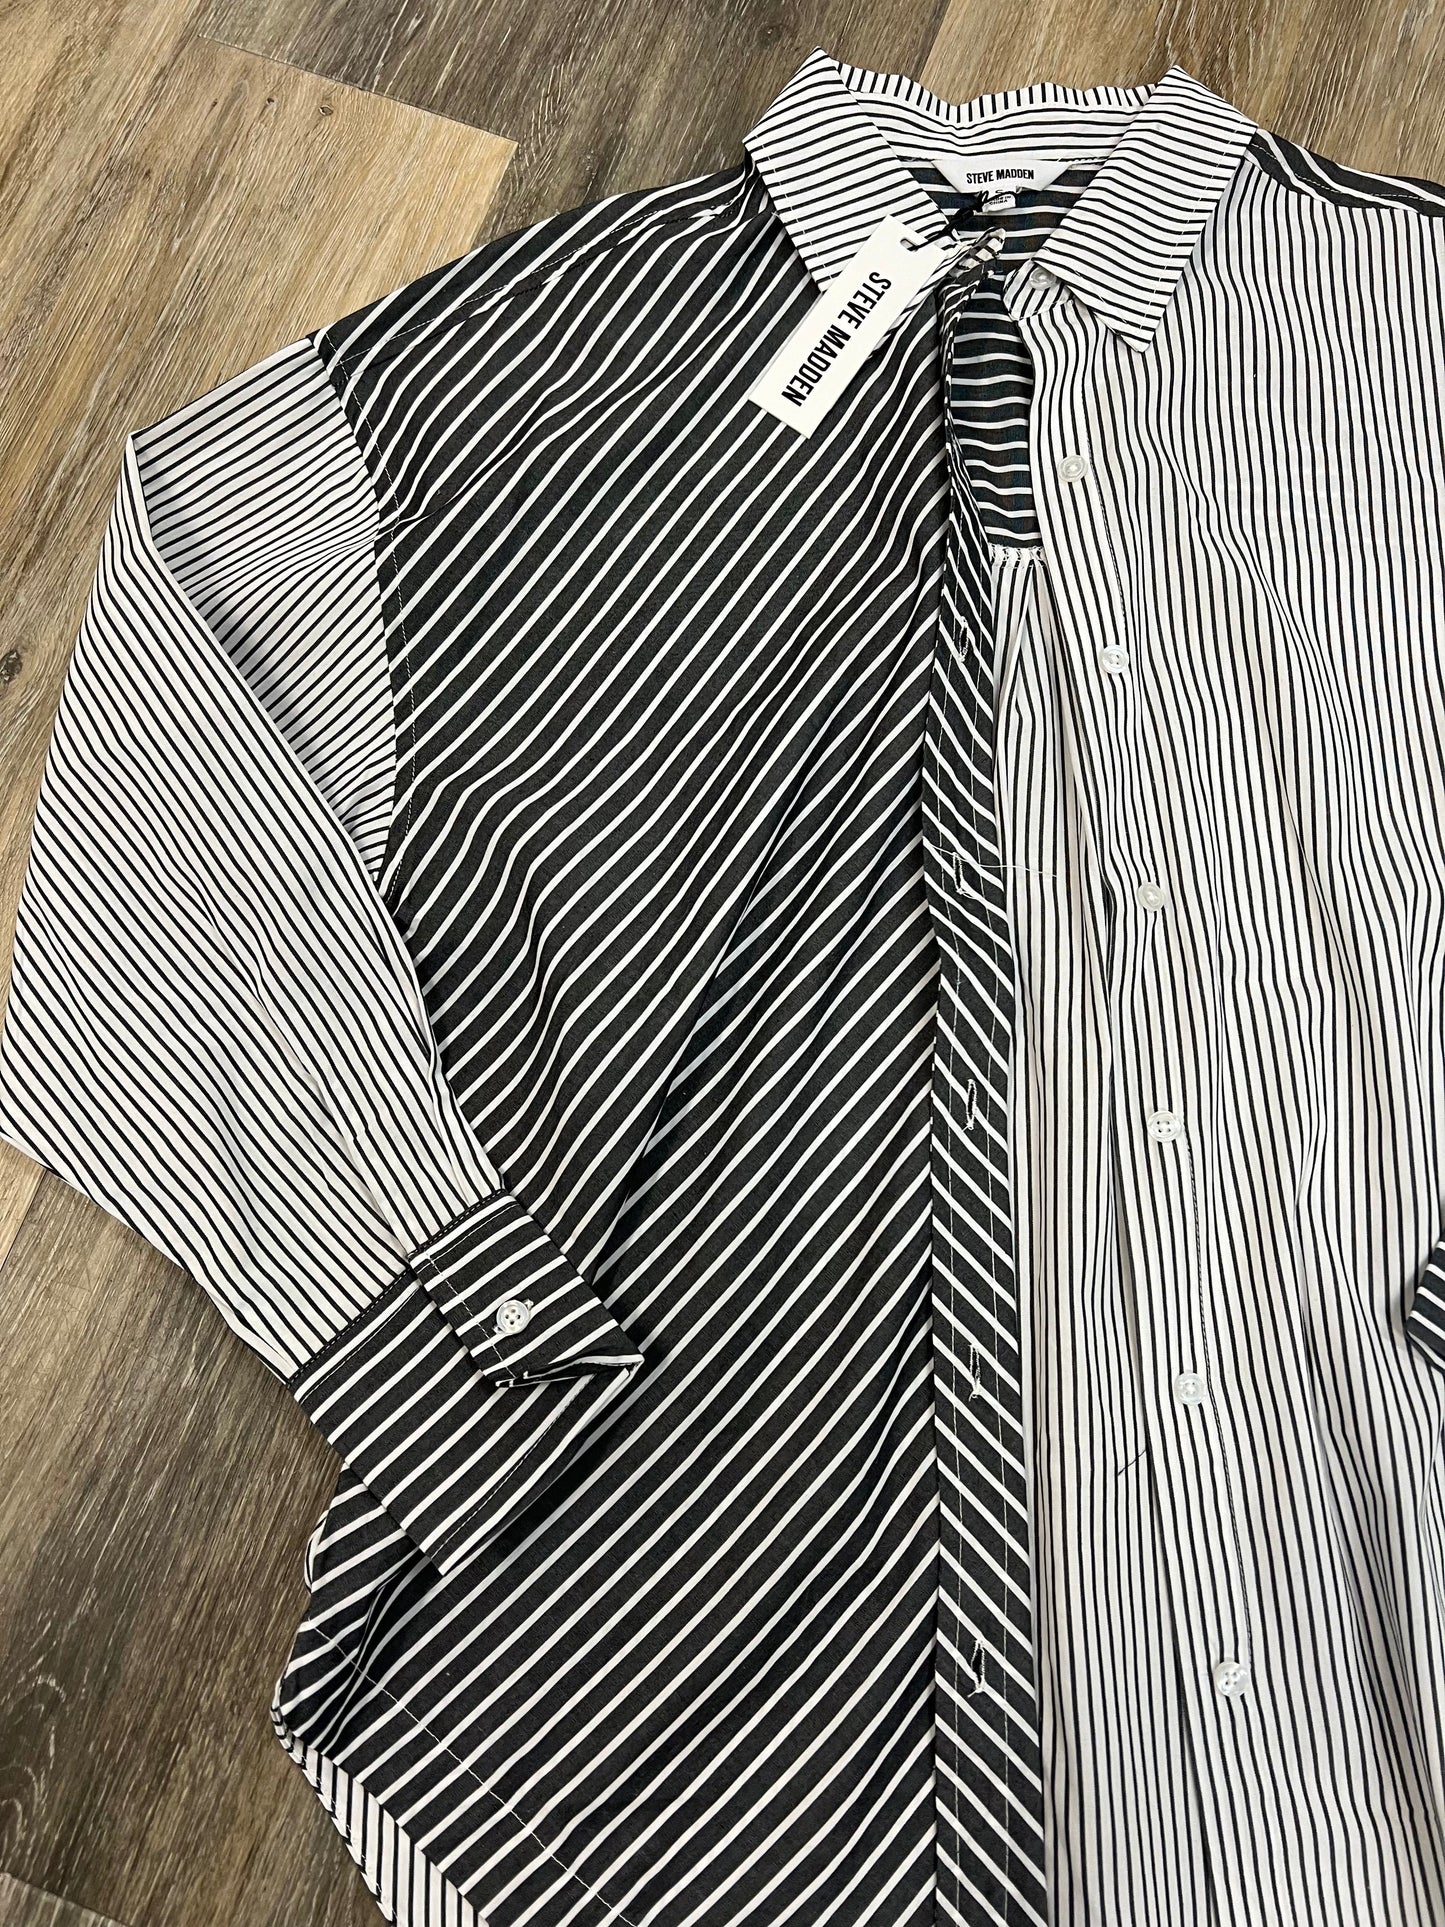 Striped Pattern Blouse Long Sleeve Steve Madden, Size S